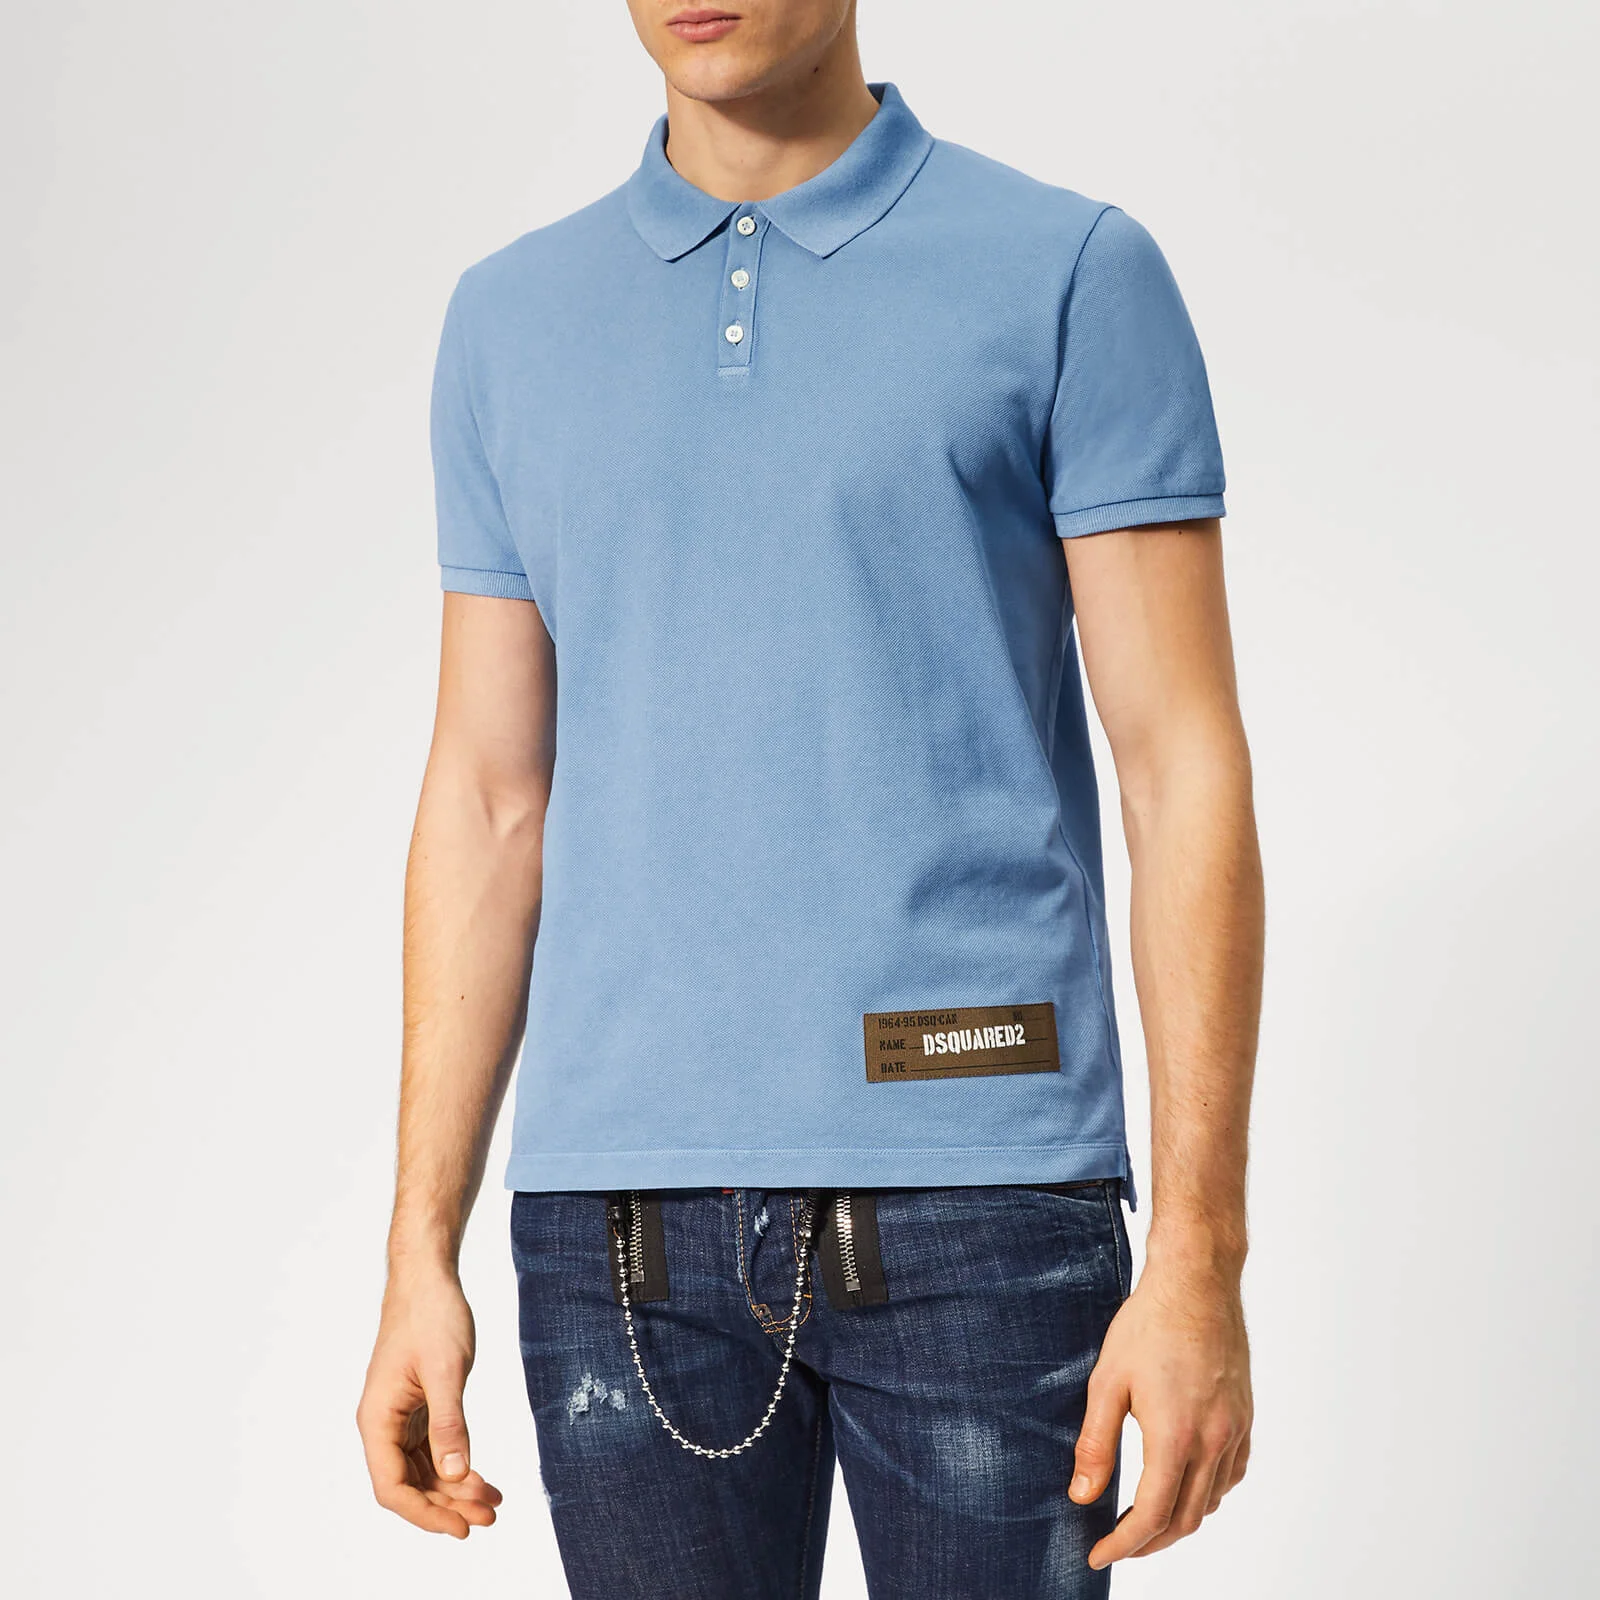 Dsquared2 Men's Classic Fit Polo Shirt - Blue Image 1